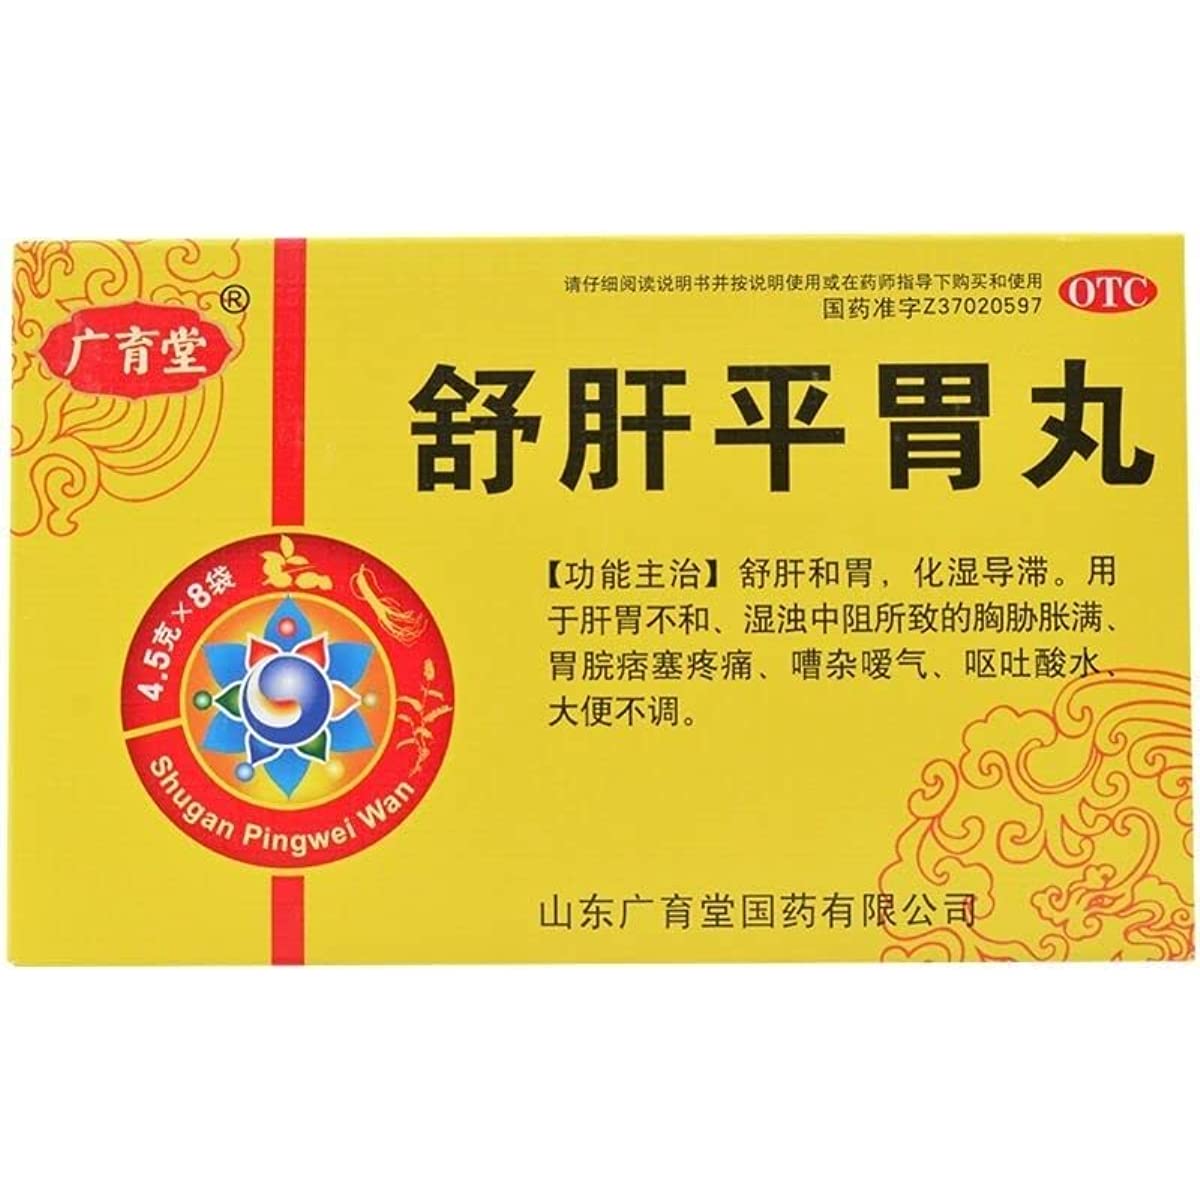 1 Box, Shugan Pingwei Wan 4.5g*8 Bags / Box 疏肝平胃丸